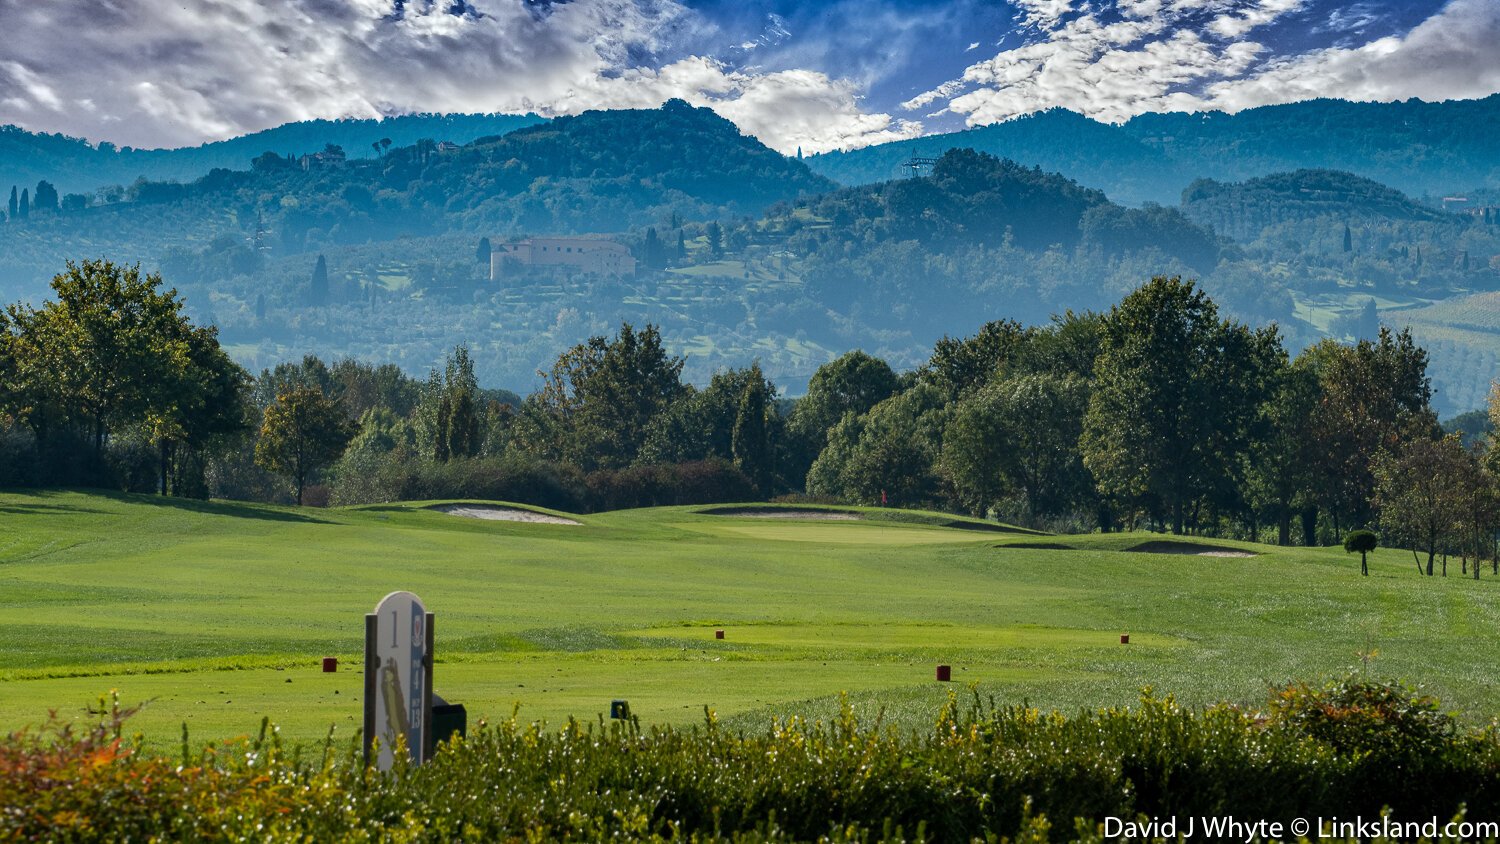 Golf Montecatini Terme, Tuscany, Italy, David J Whyte @ Linksland.com (1 of 1)-9.jpg